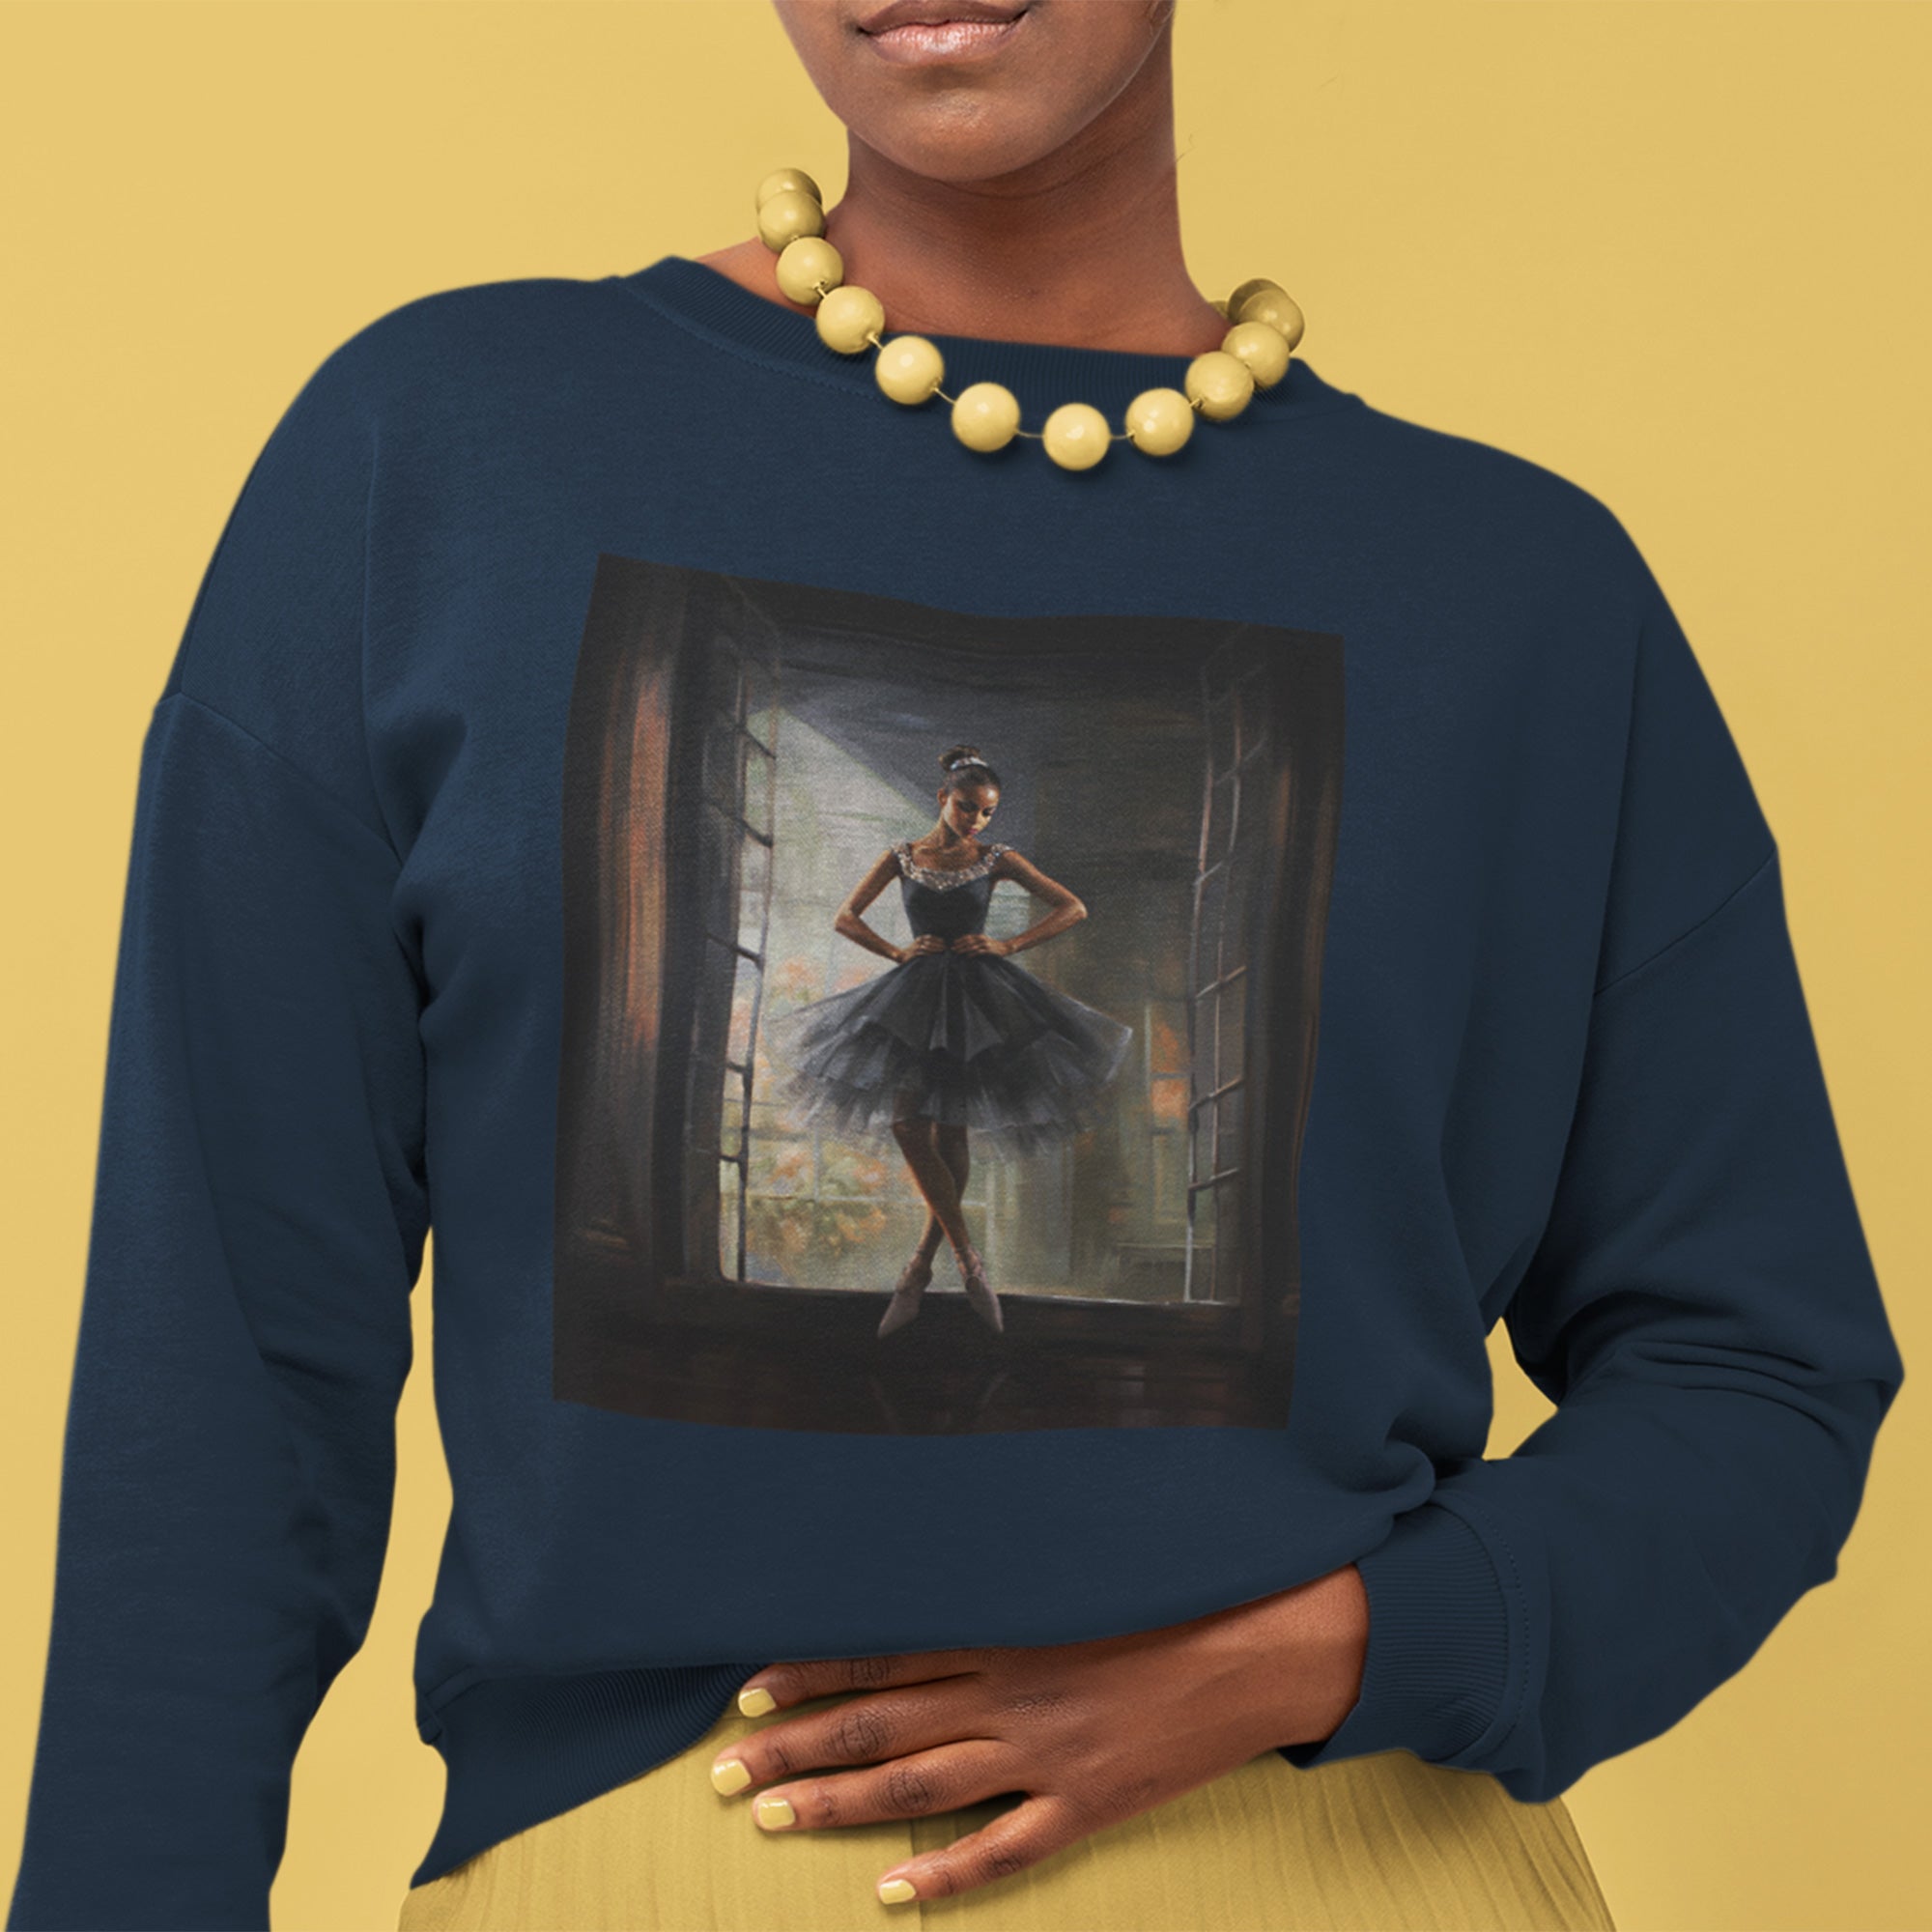 Black Ballerina Sweatshirt on model.